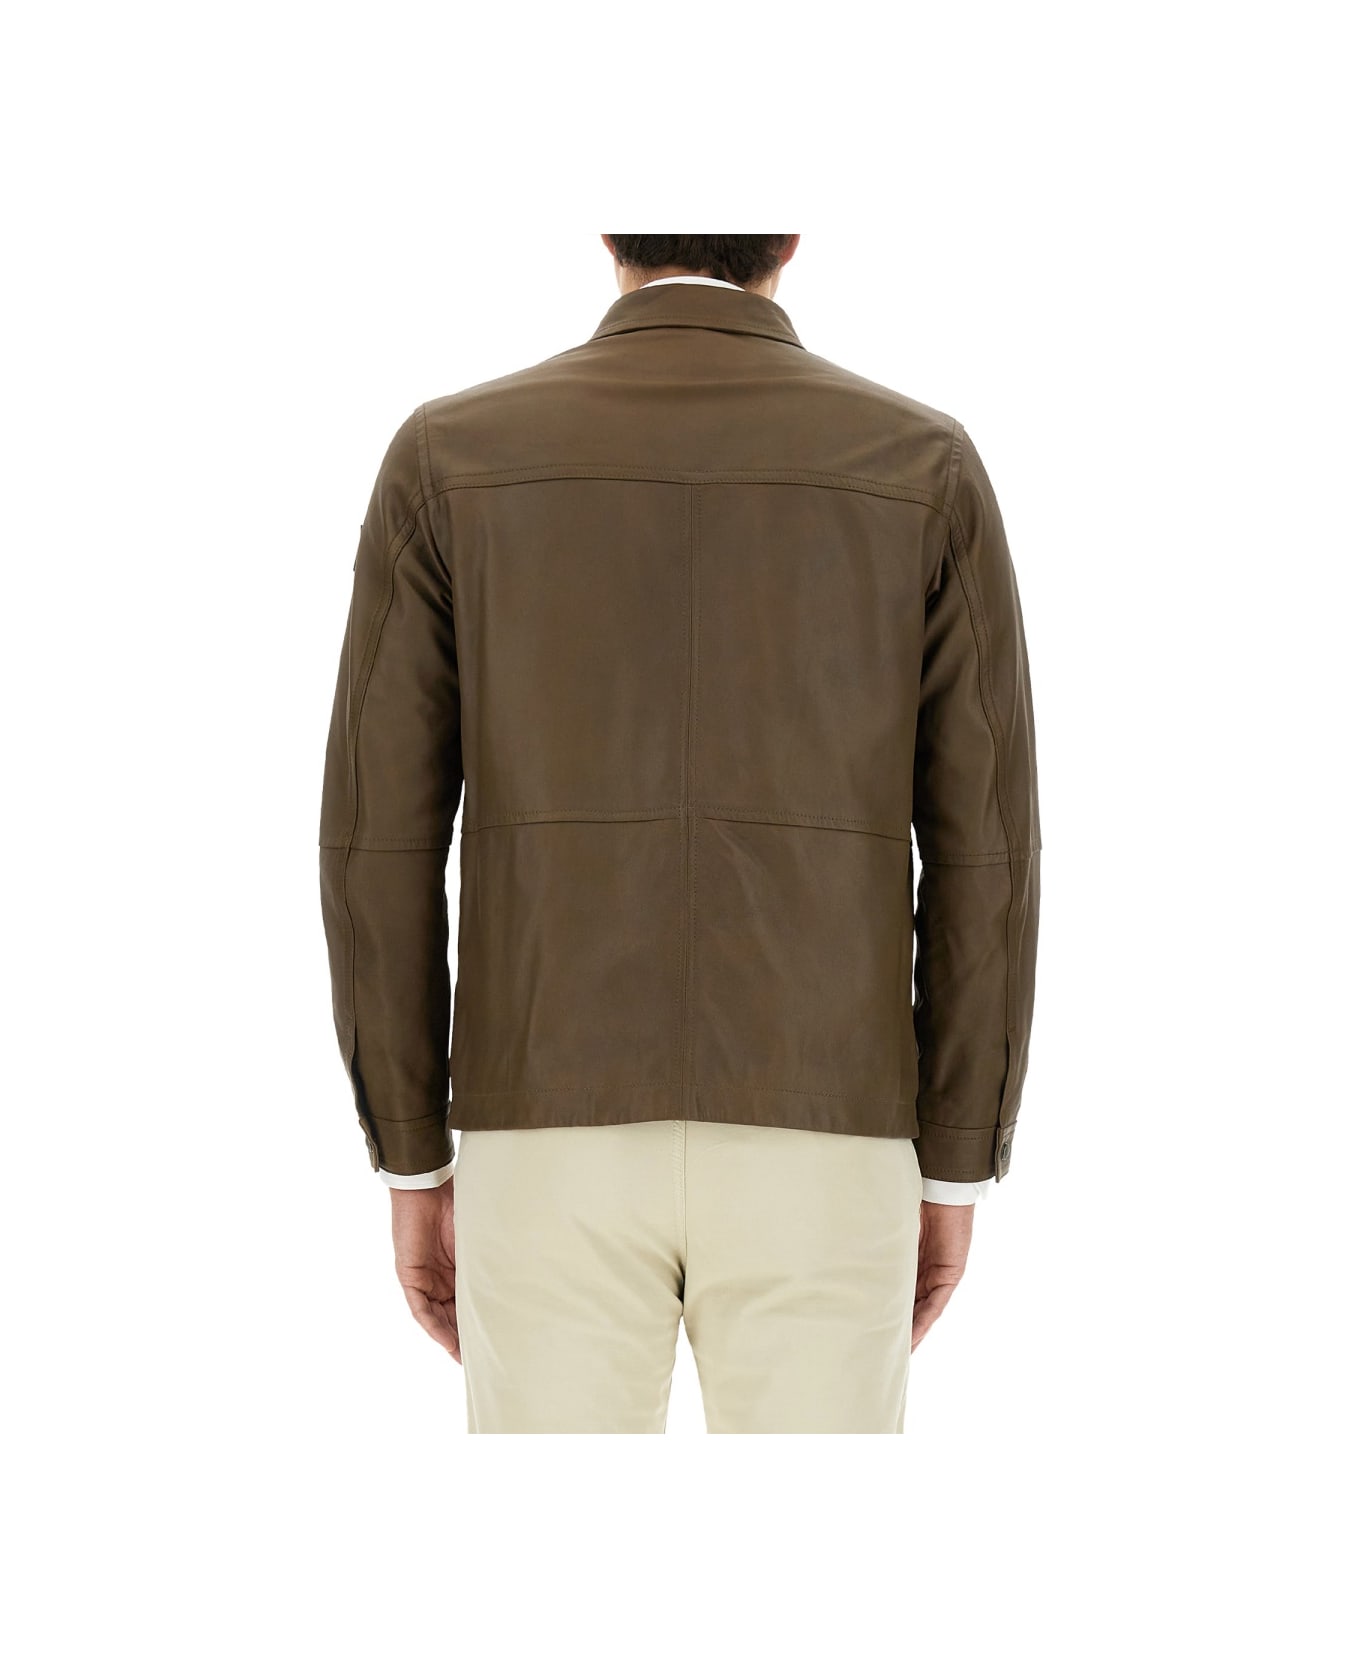 Hugo Boss Jacket With Collar - BROWN